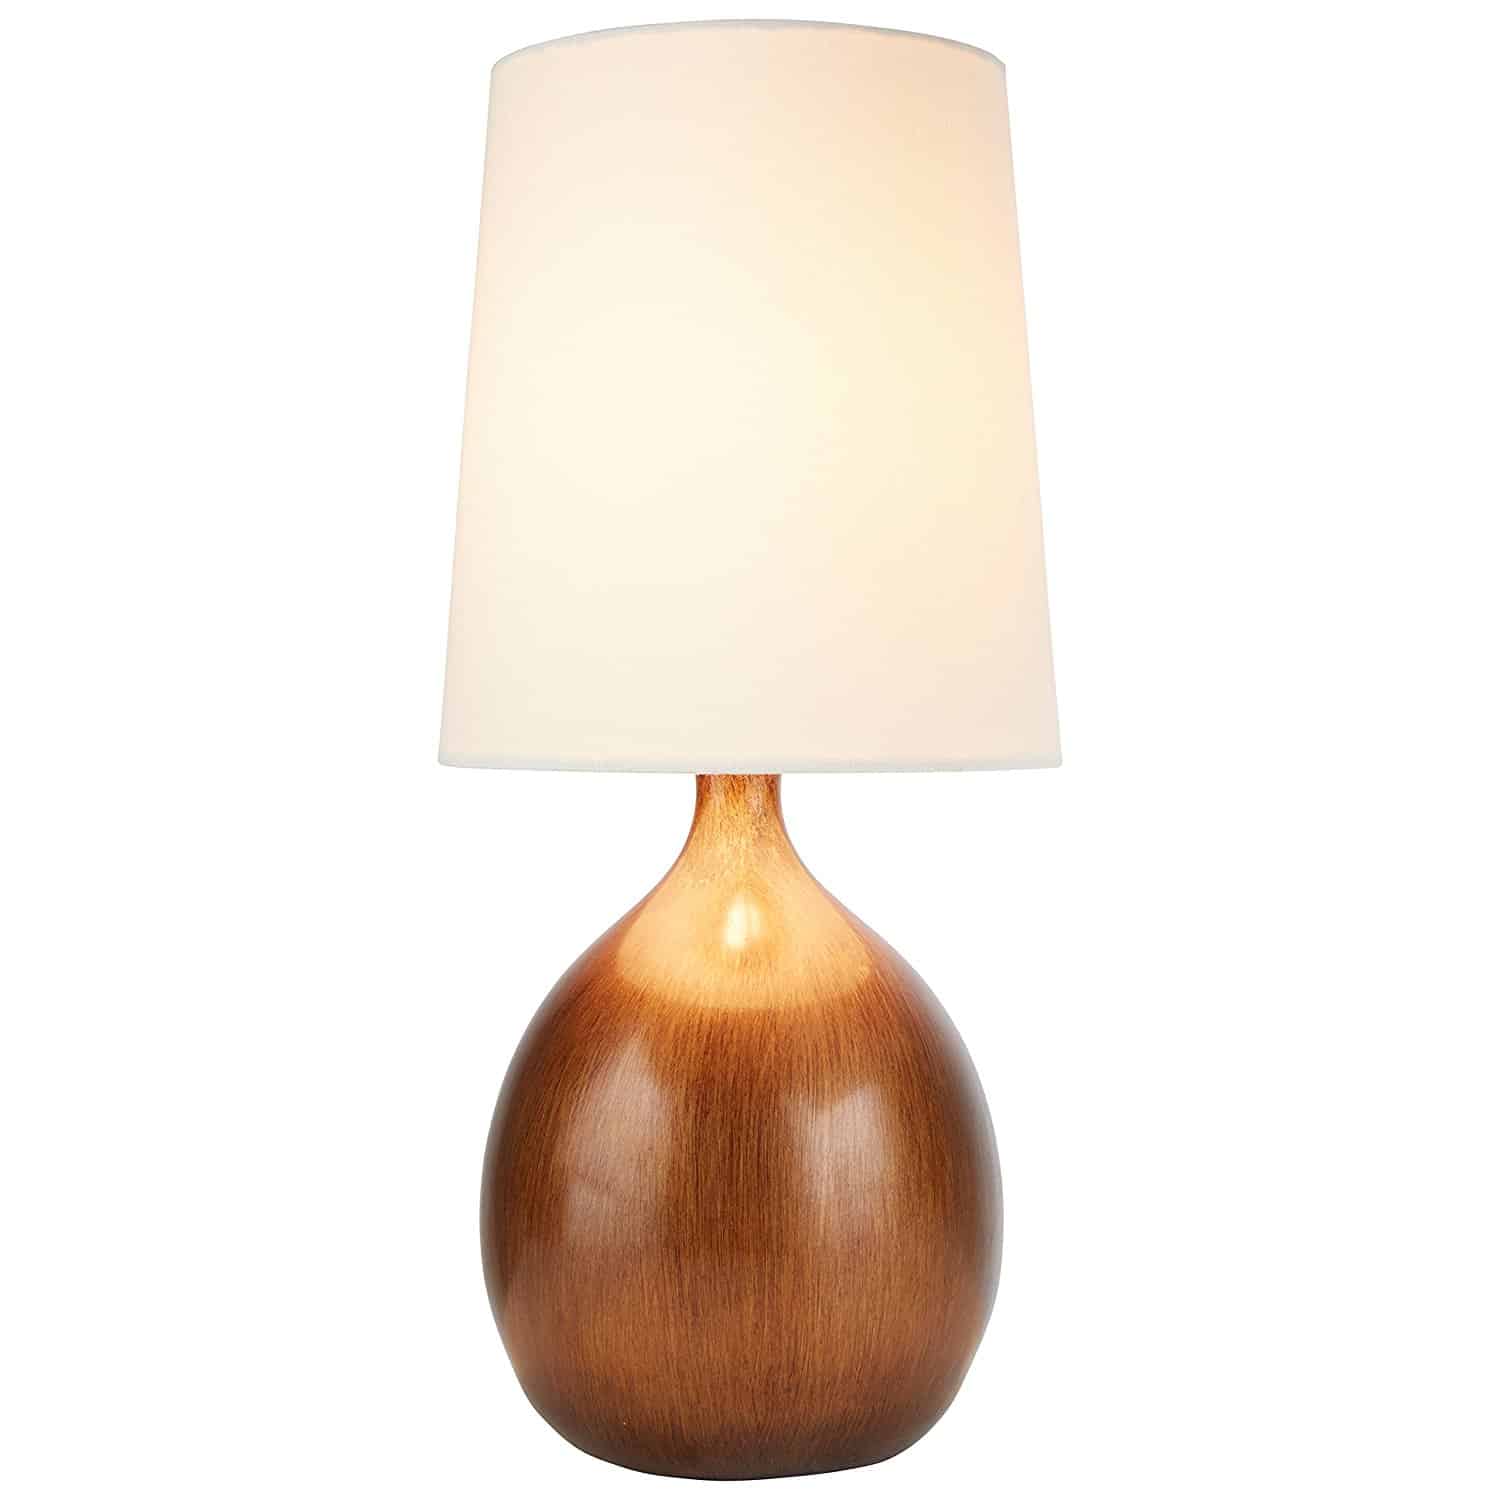  Stone & Beam Modern Wood Grain-Look Lamp